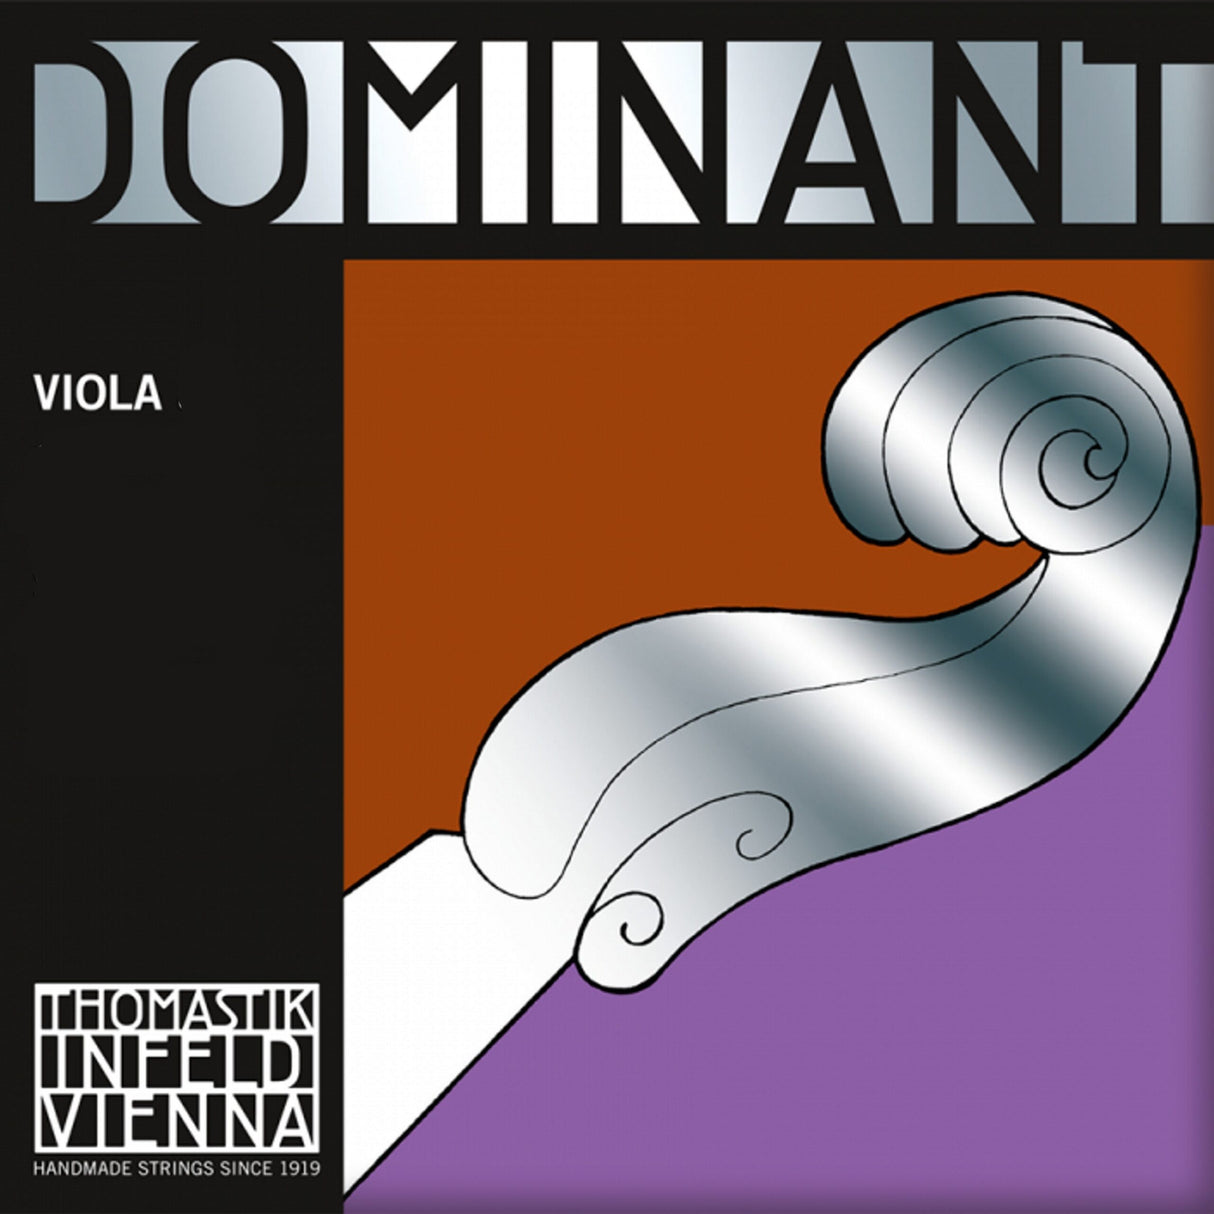 Thomastik-Infeld 139T Dominant Viola C Strings, Tube of 12, 14.5 - 15 Inch